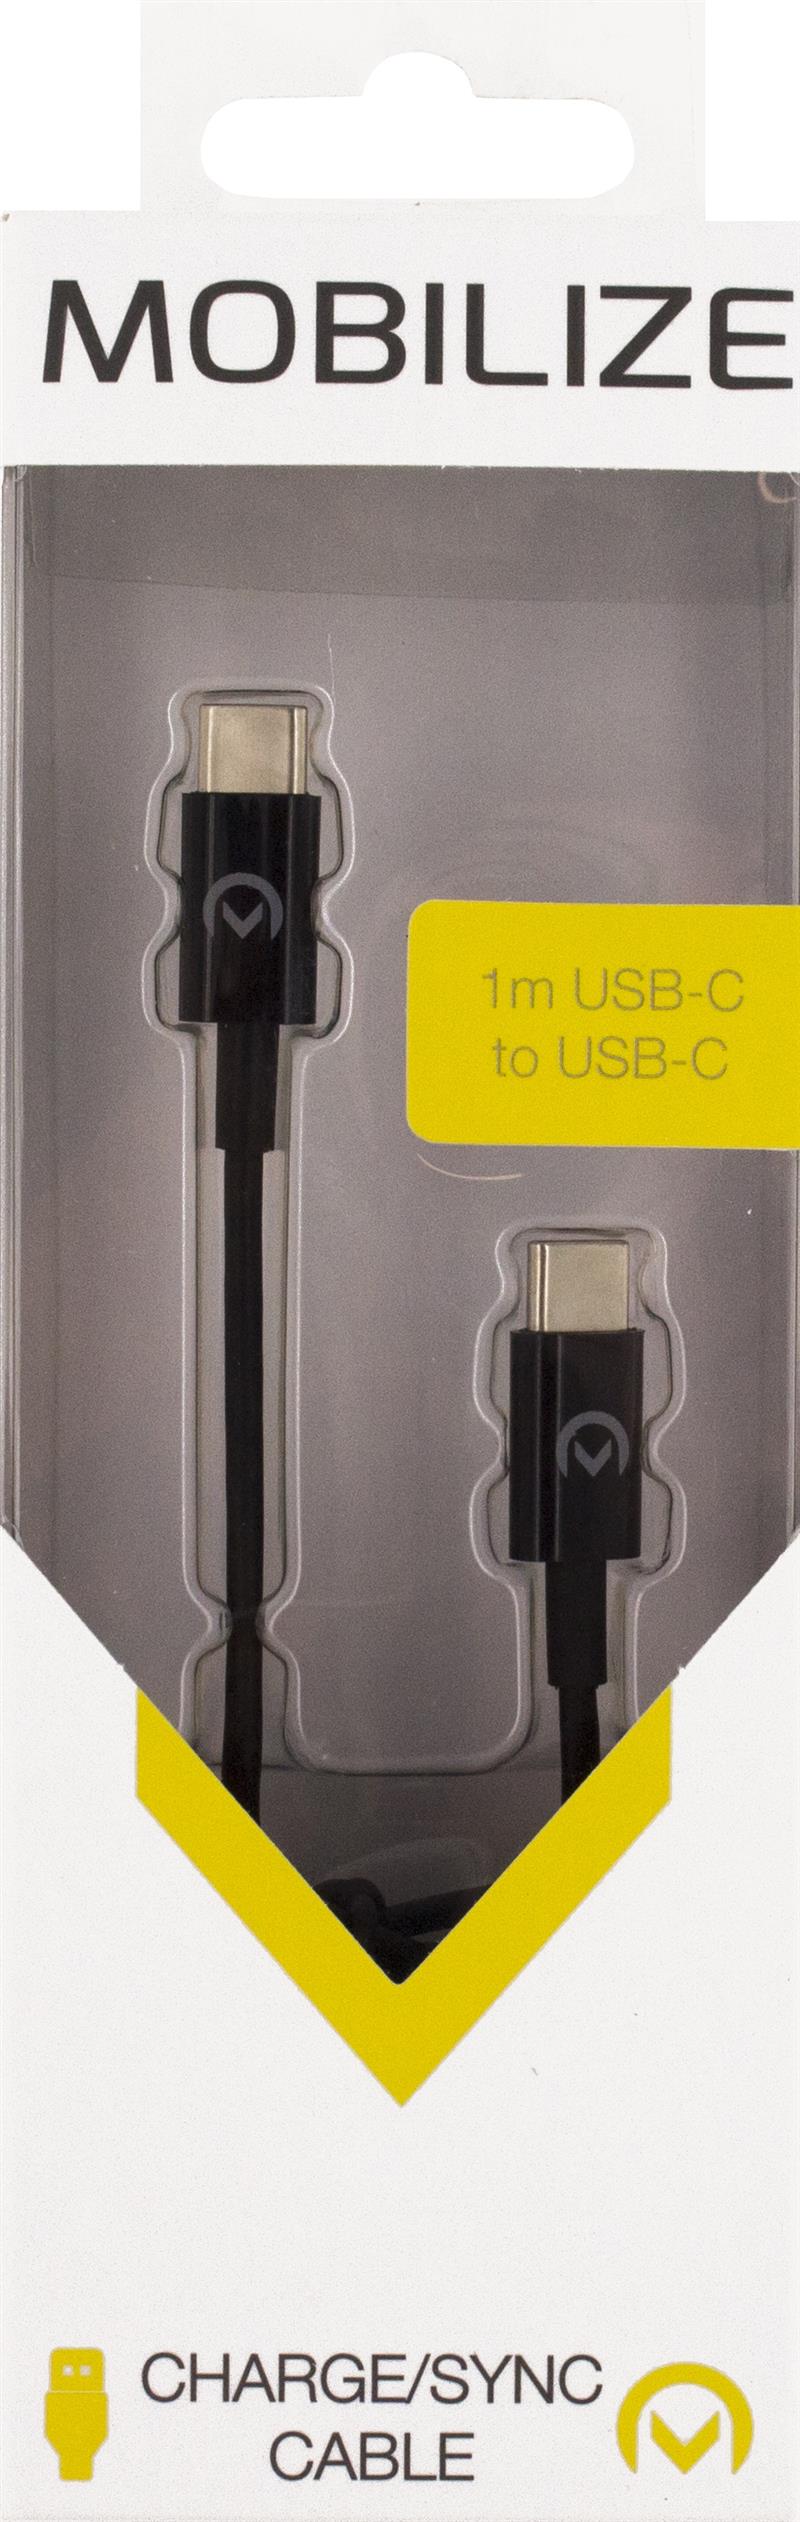 Mobilize Cable USB-C to USB-C 1m 60W Black